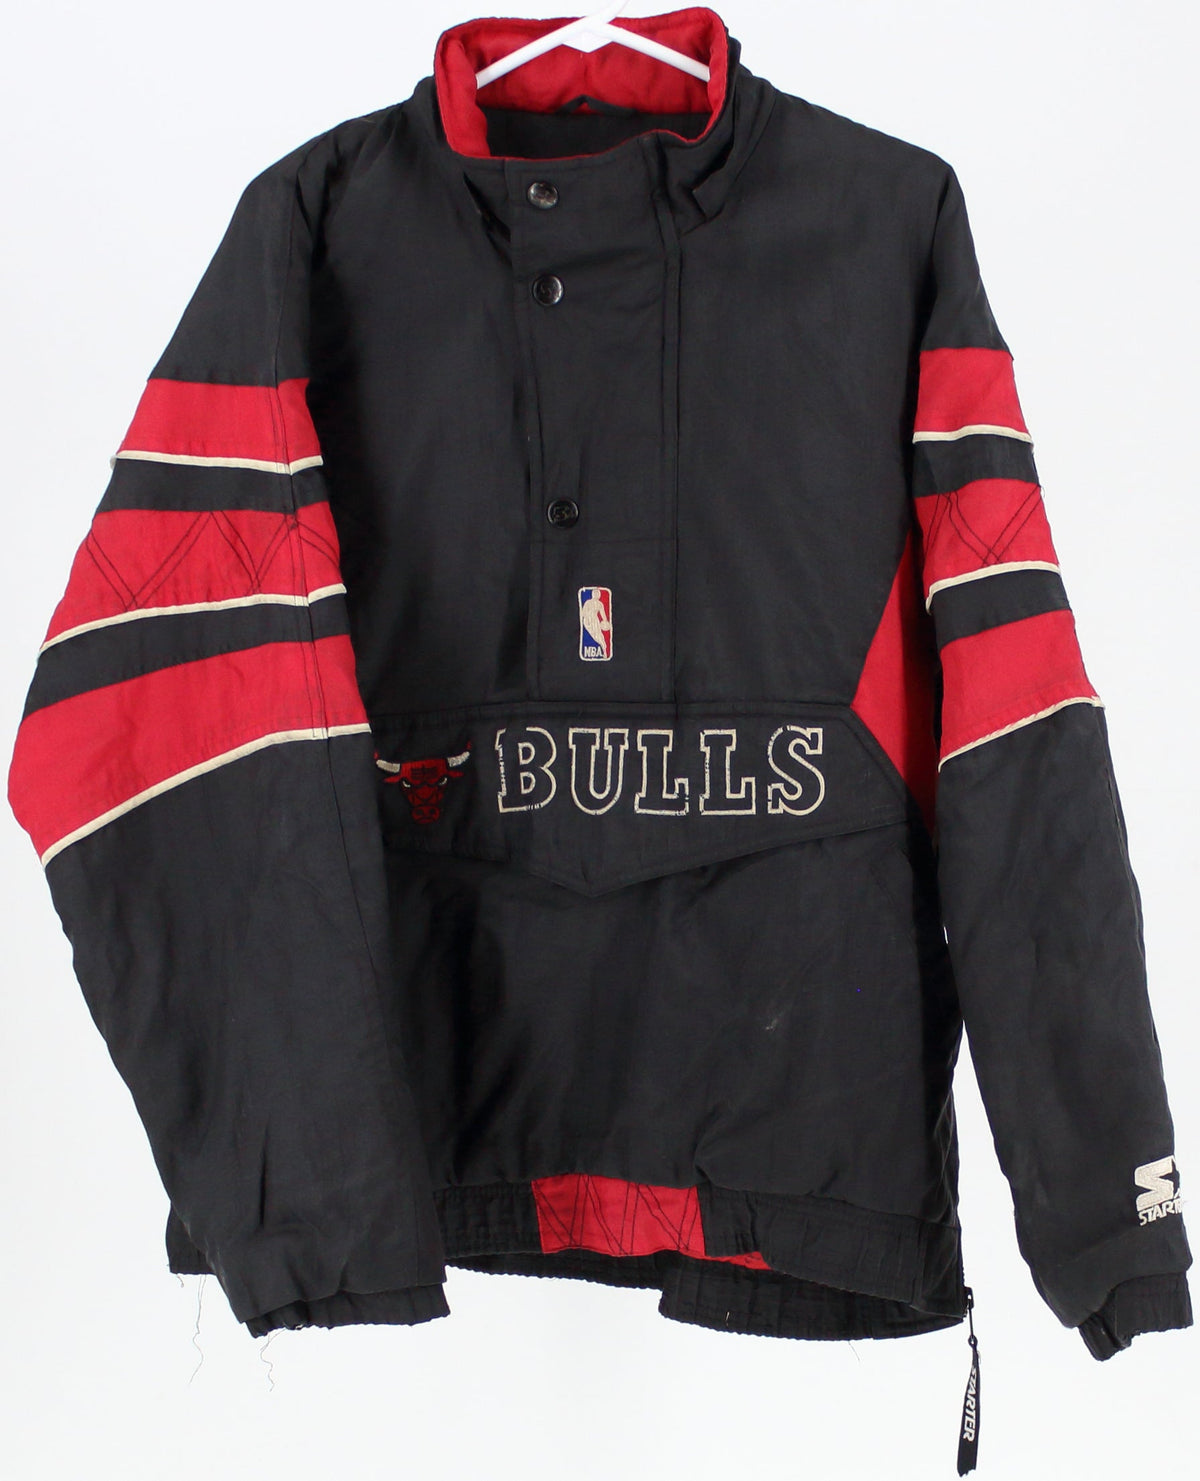 Starter Authentic NBA Bulls Black and Red Nylon Jacket